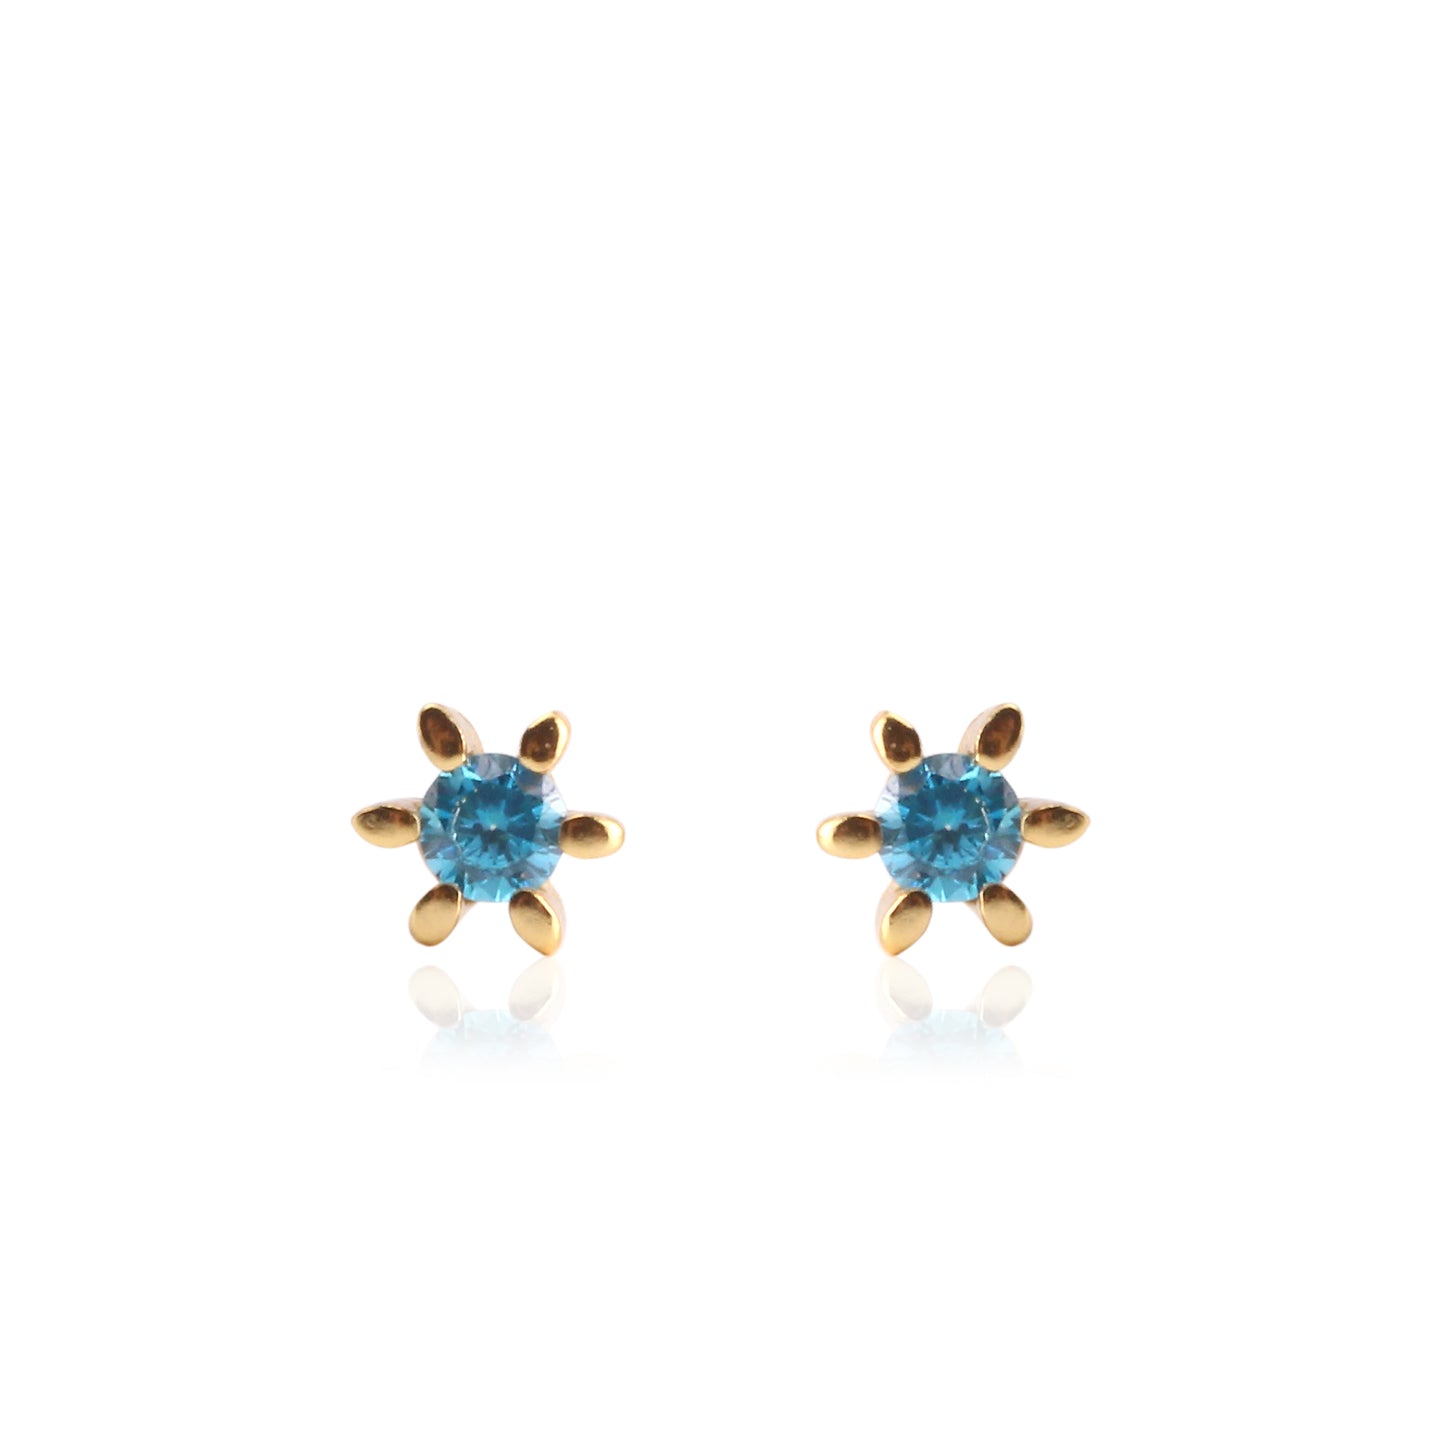 Earrings Blue Cz 18K G'Plated Studs